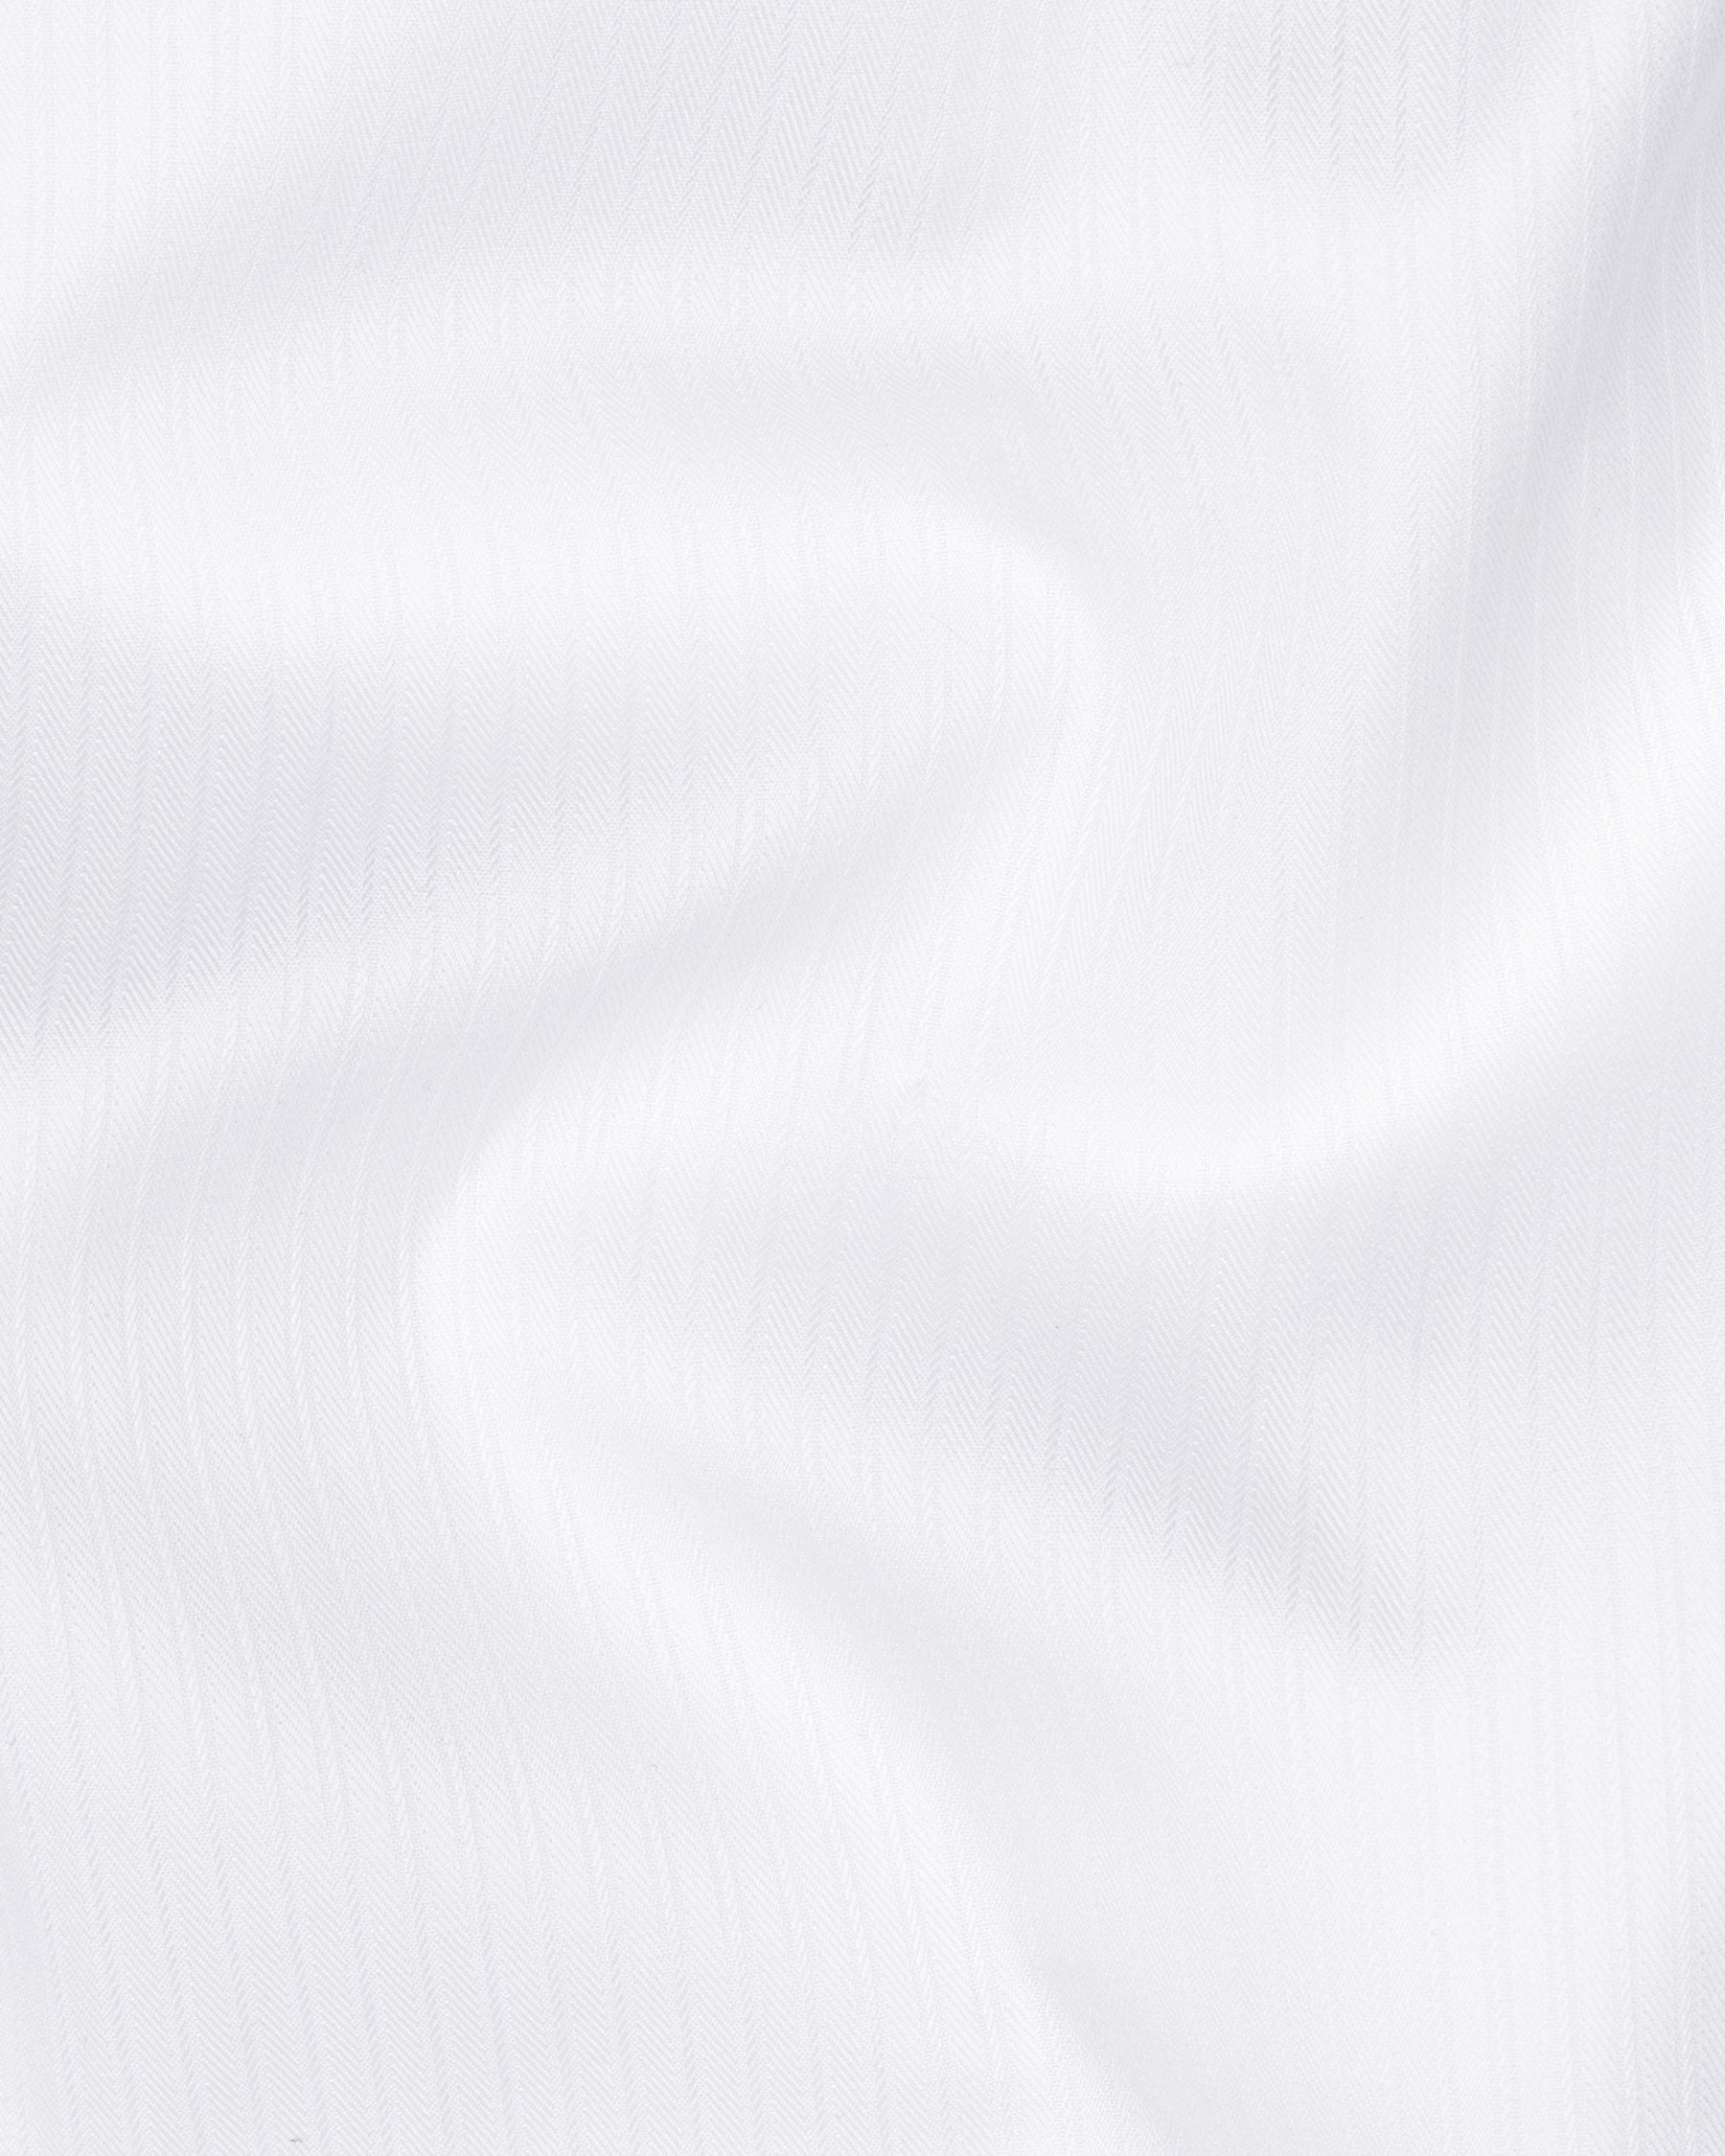 Bright White Subtle Striped Dobby textured Premium Giza Cotton Shirt 5810-38, 5810-H-38, 5810-39, 5810-H-39, 5810-40, 5810-H-40, 5810-42, 5810-H-42, 5810-44, 5810-H-44, 5810-46, 5810-H-46, 5810-48, 5810-H-48, 5810-50, 5810-H-50, 5810-52, 5810-H-52